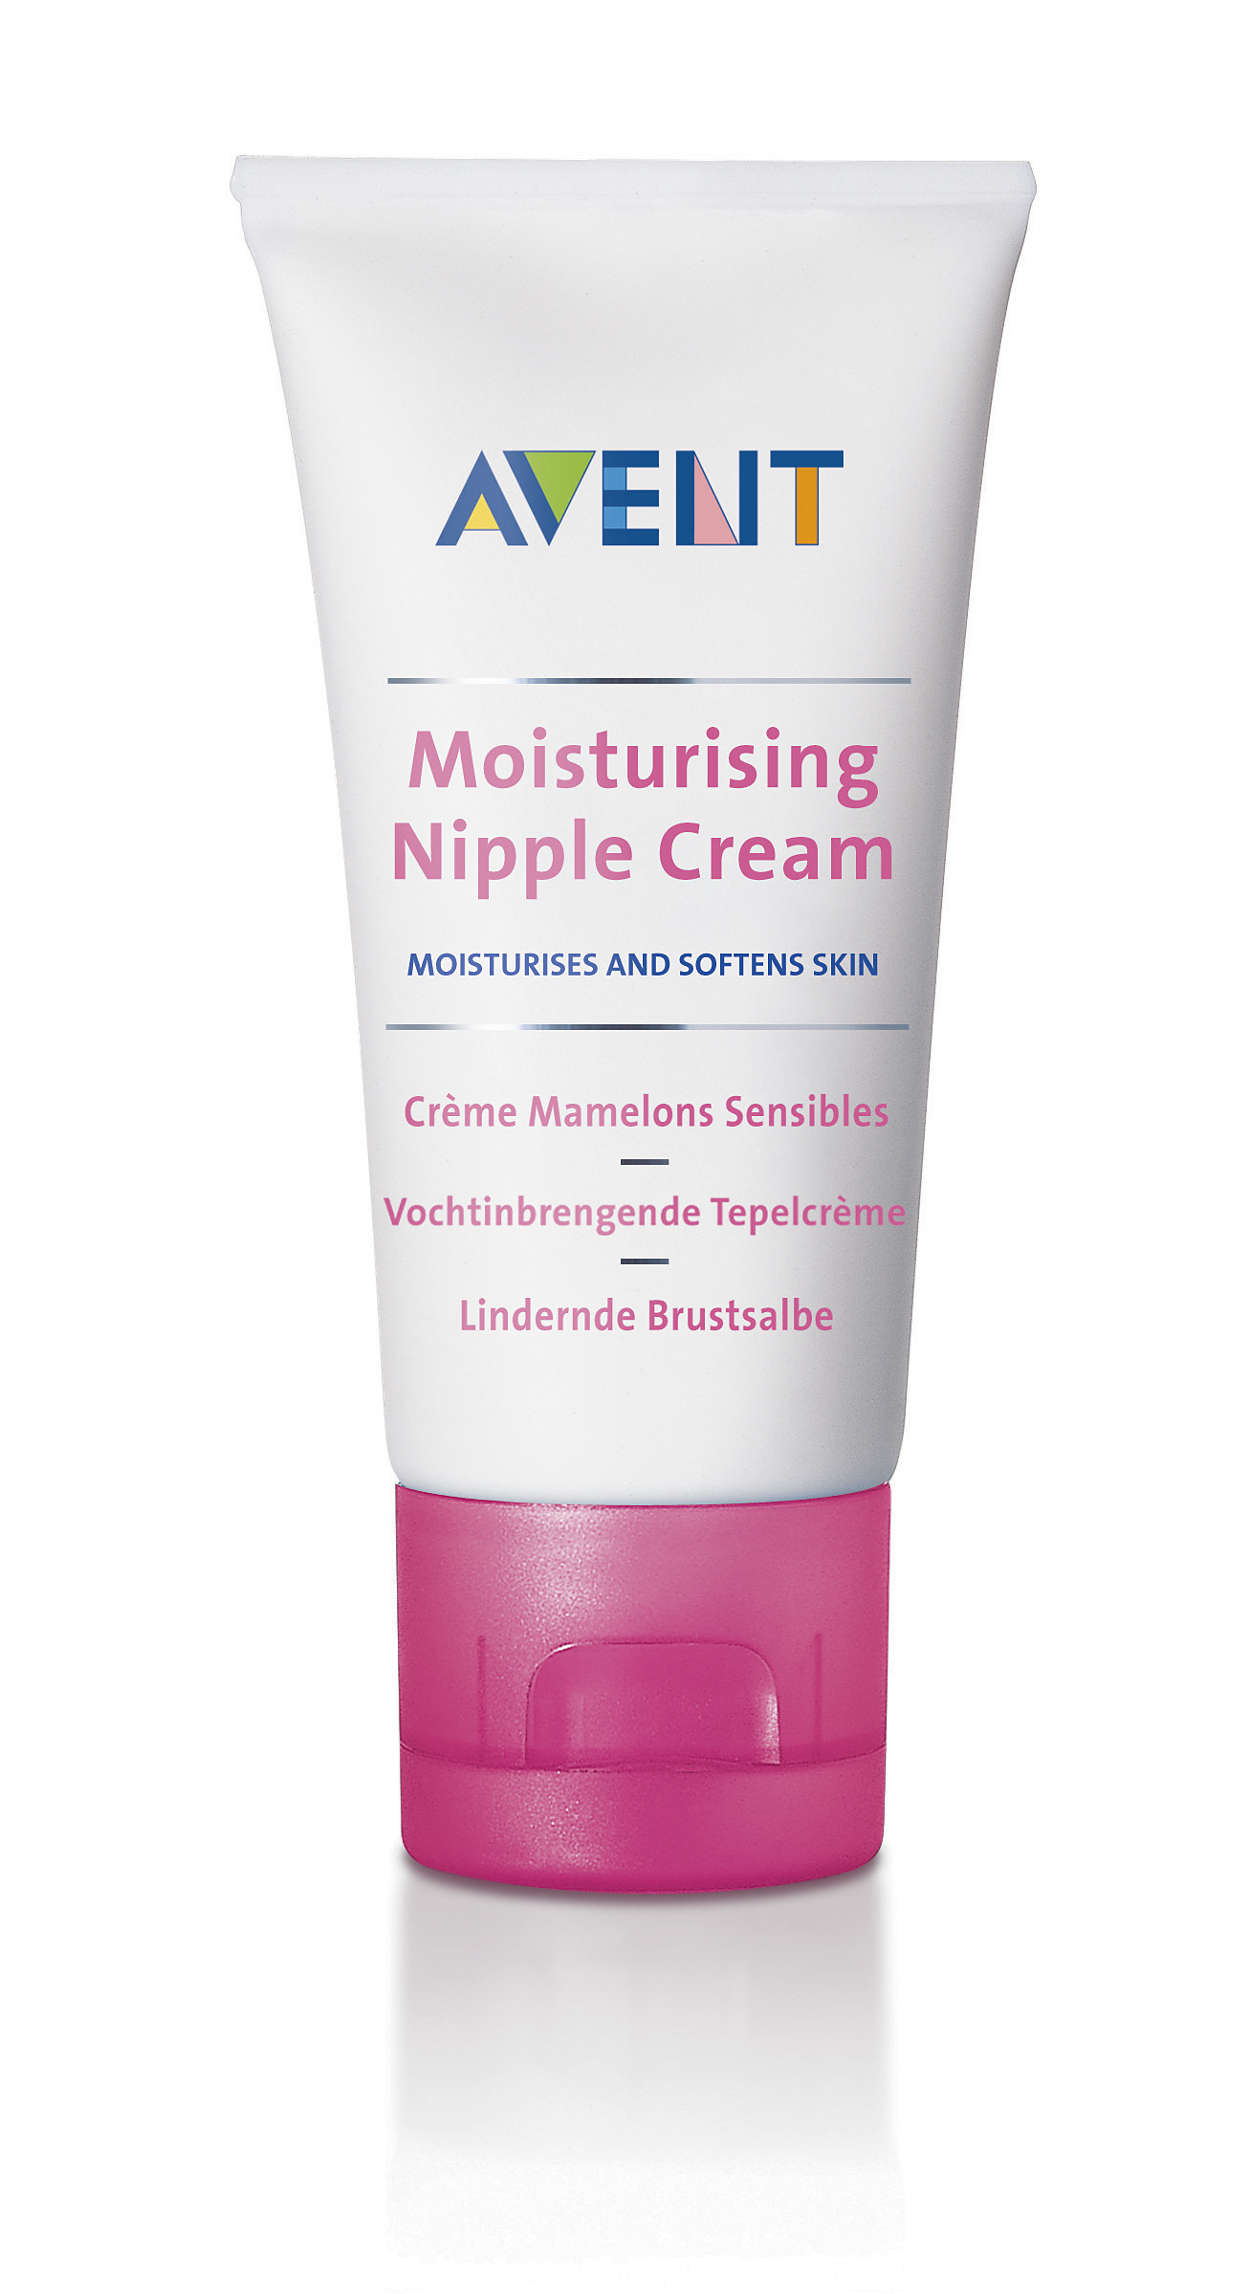 Moisturises and softens skin